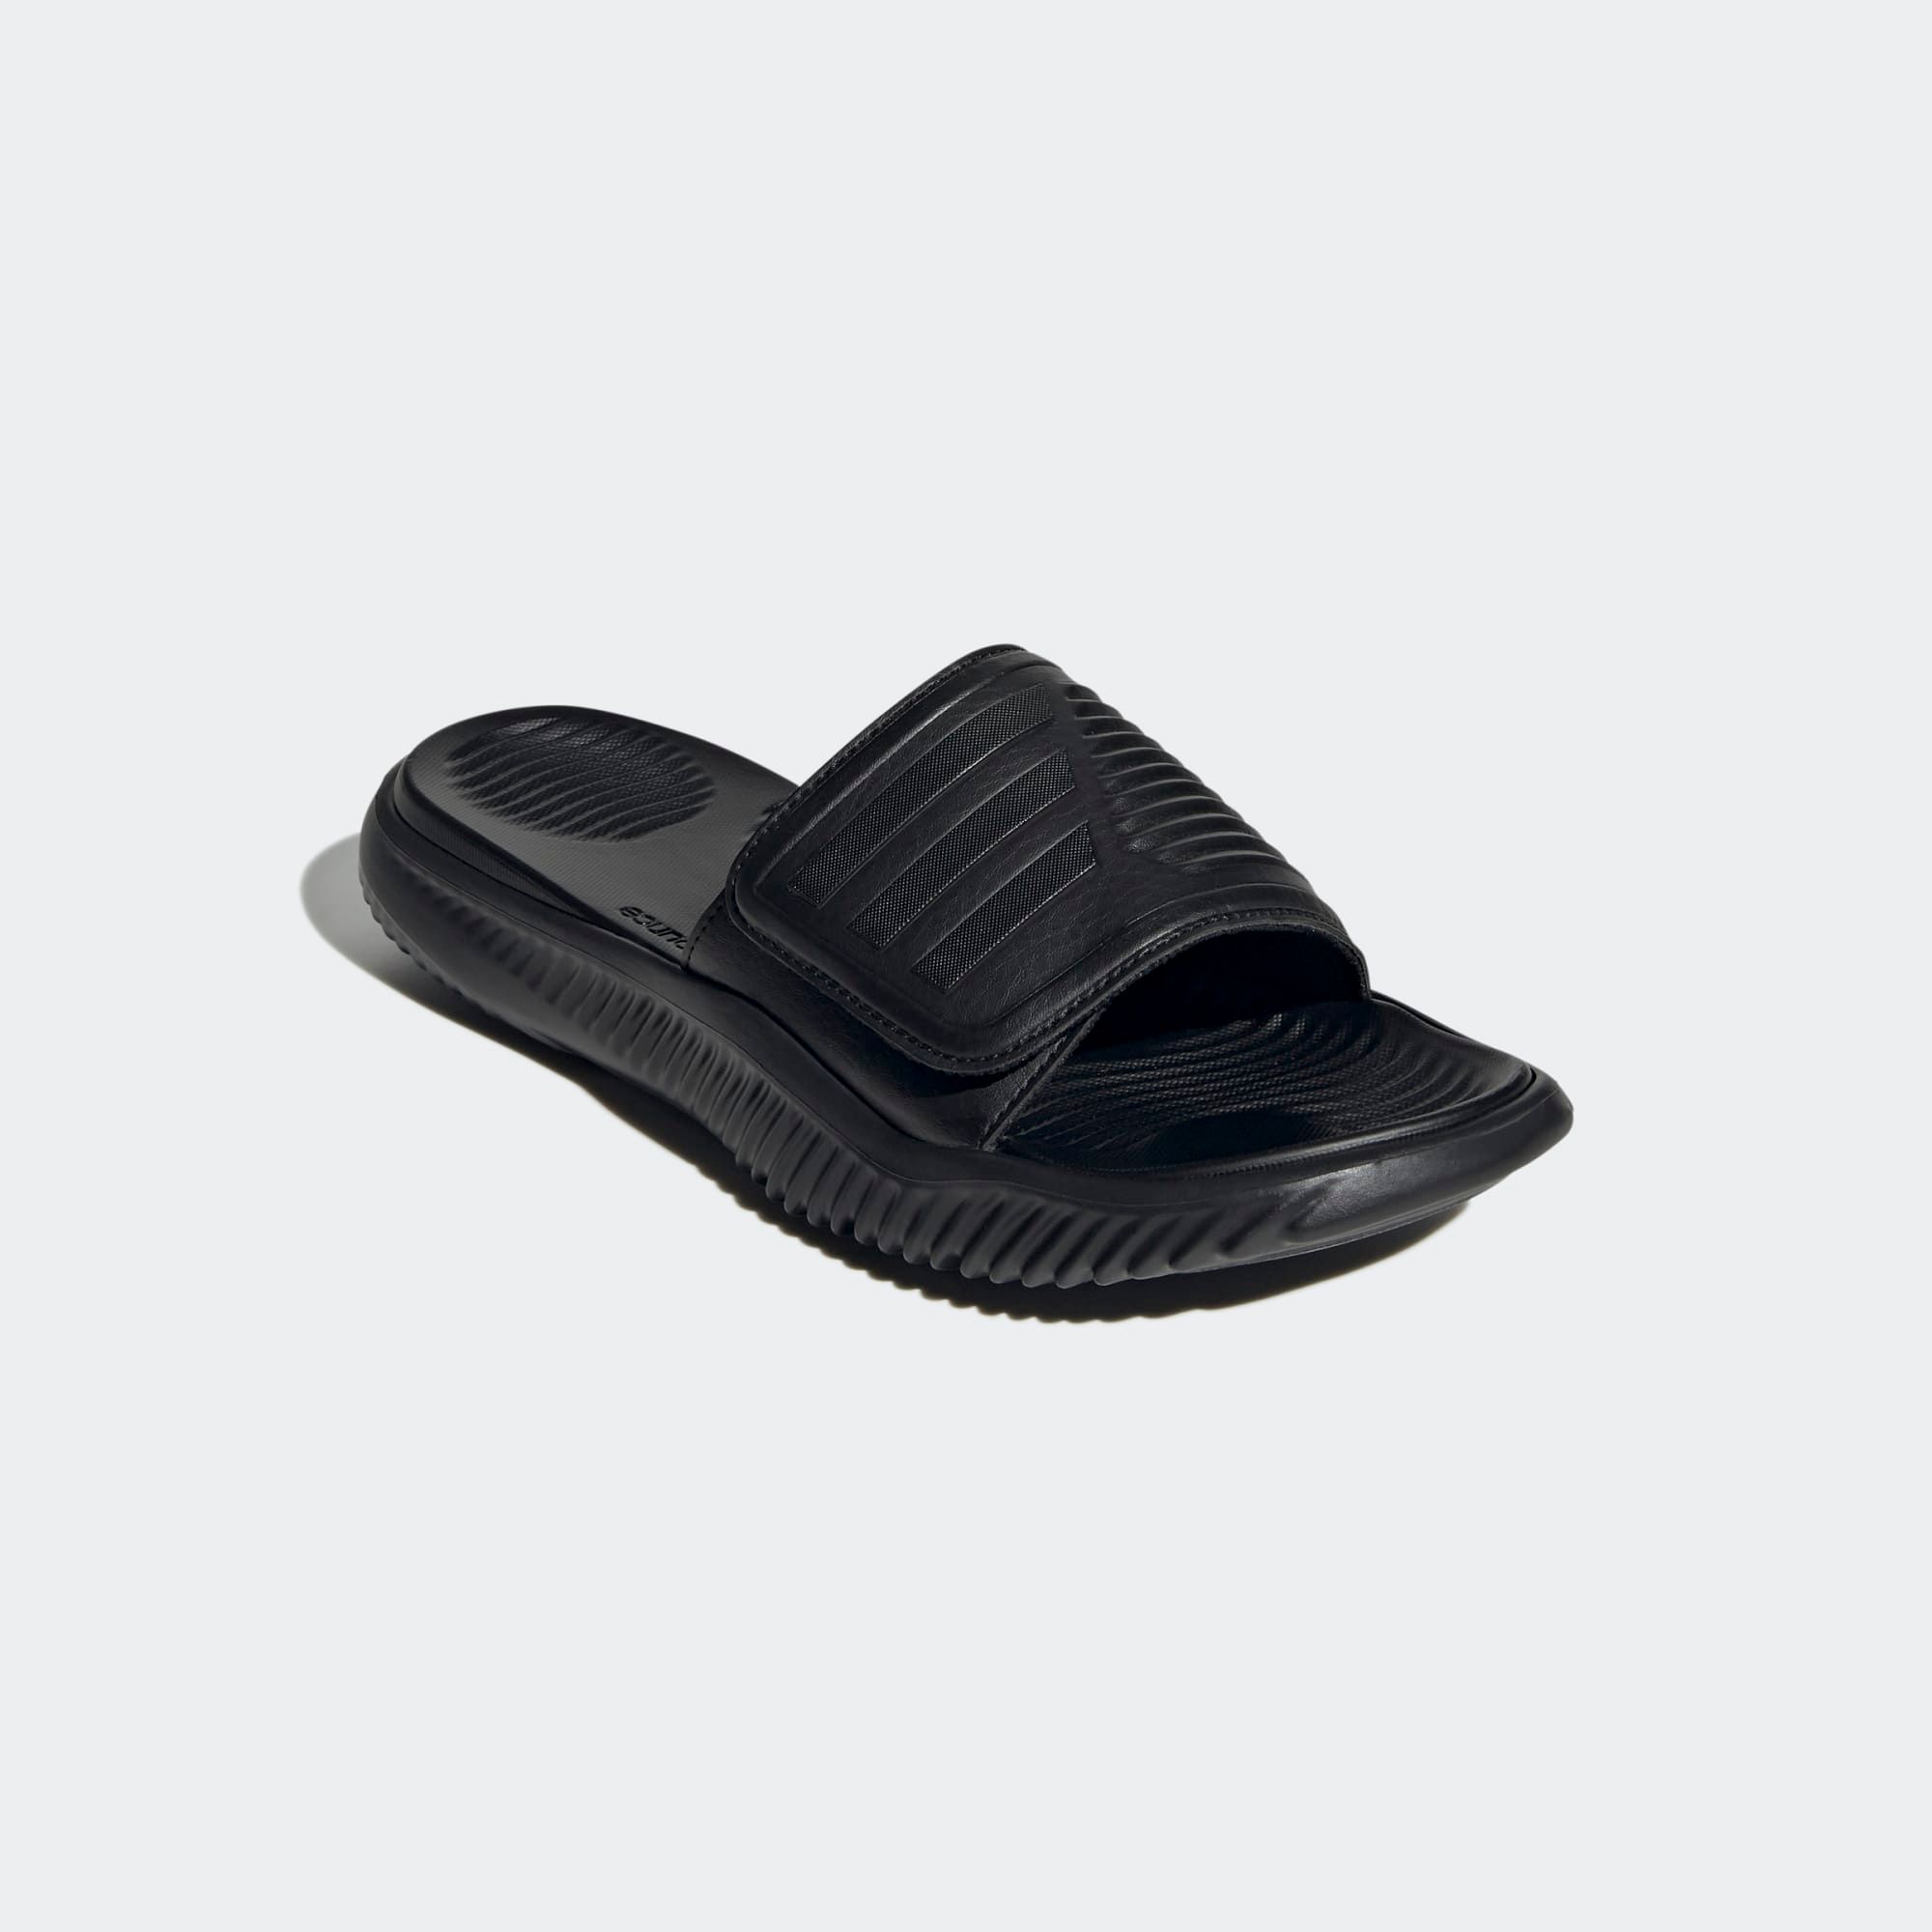  adidas Alphabounce Slides - Black 